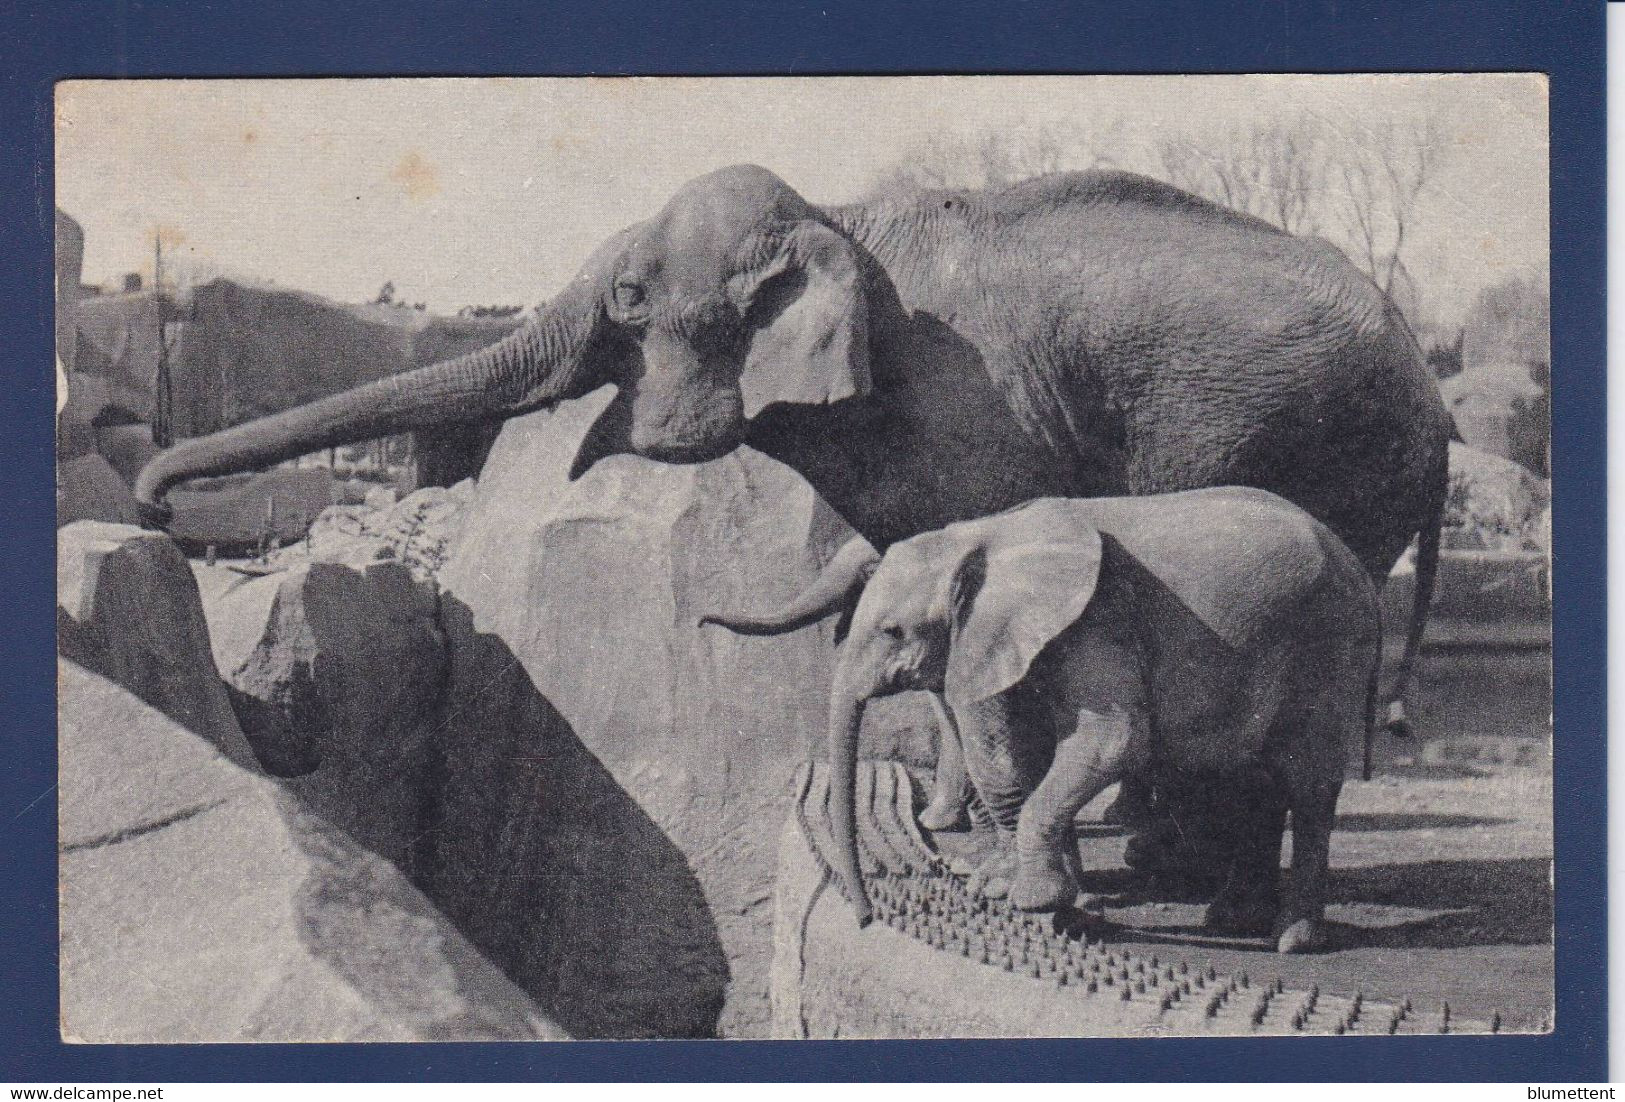 CPA éléphant Circulé - Elefanten